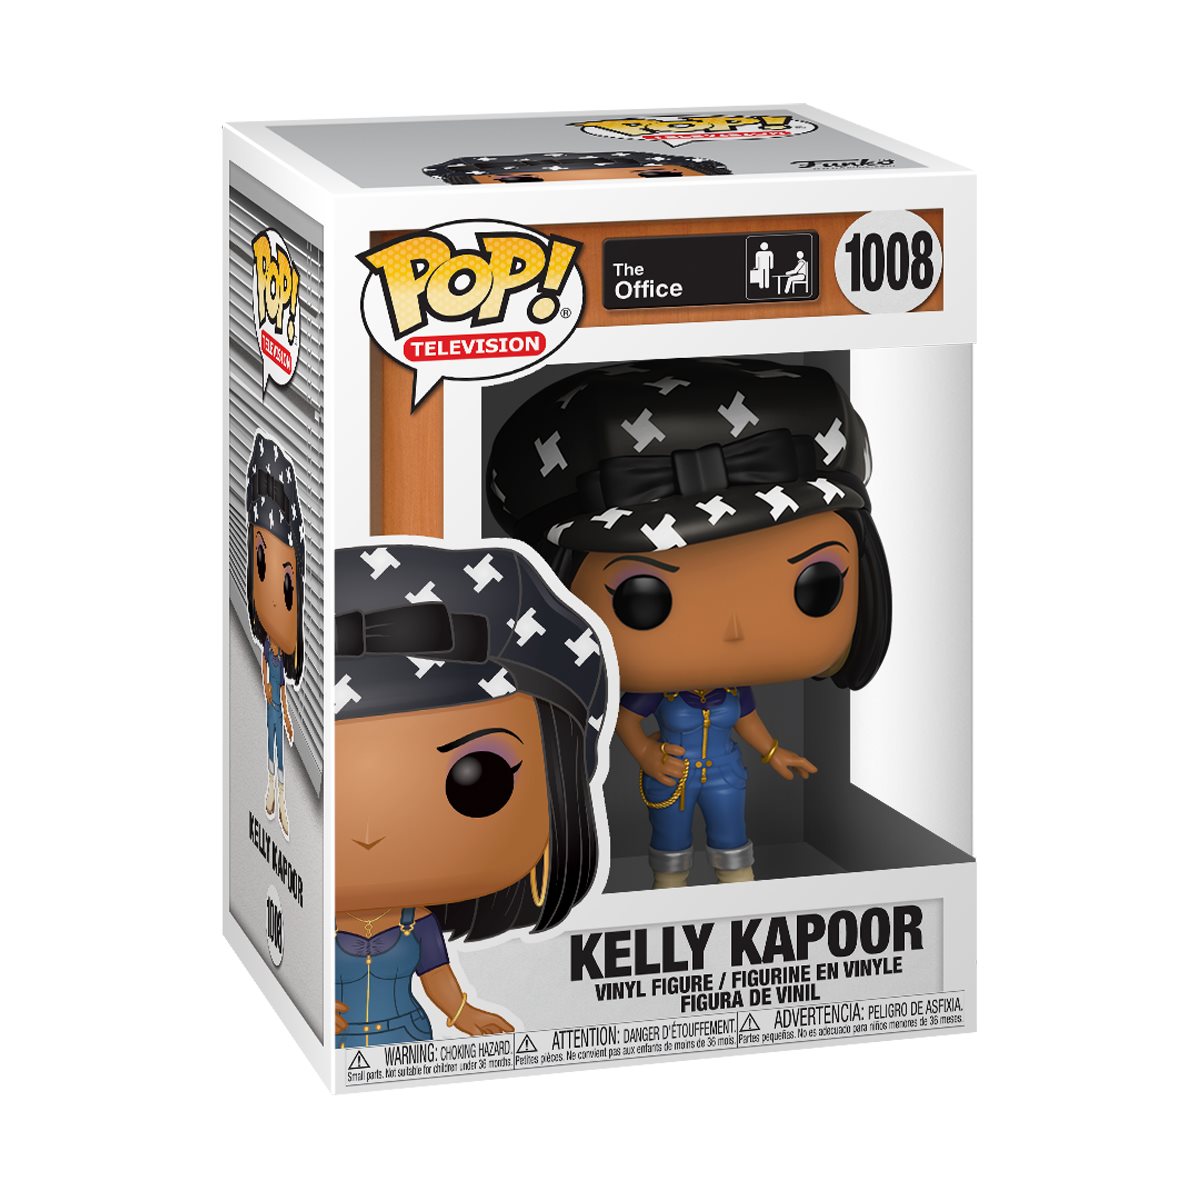 The Office: Kelly Kapoor Pop! Vinyl Figure (1008)